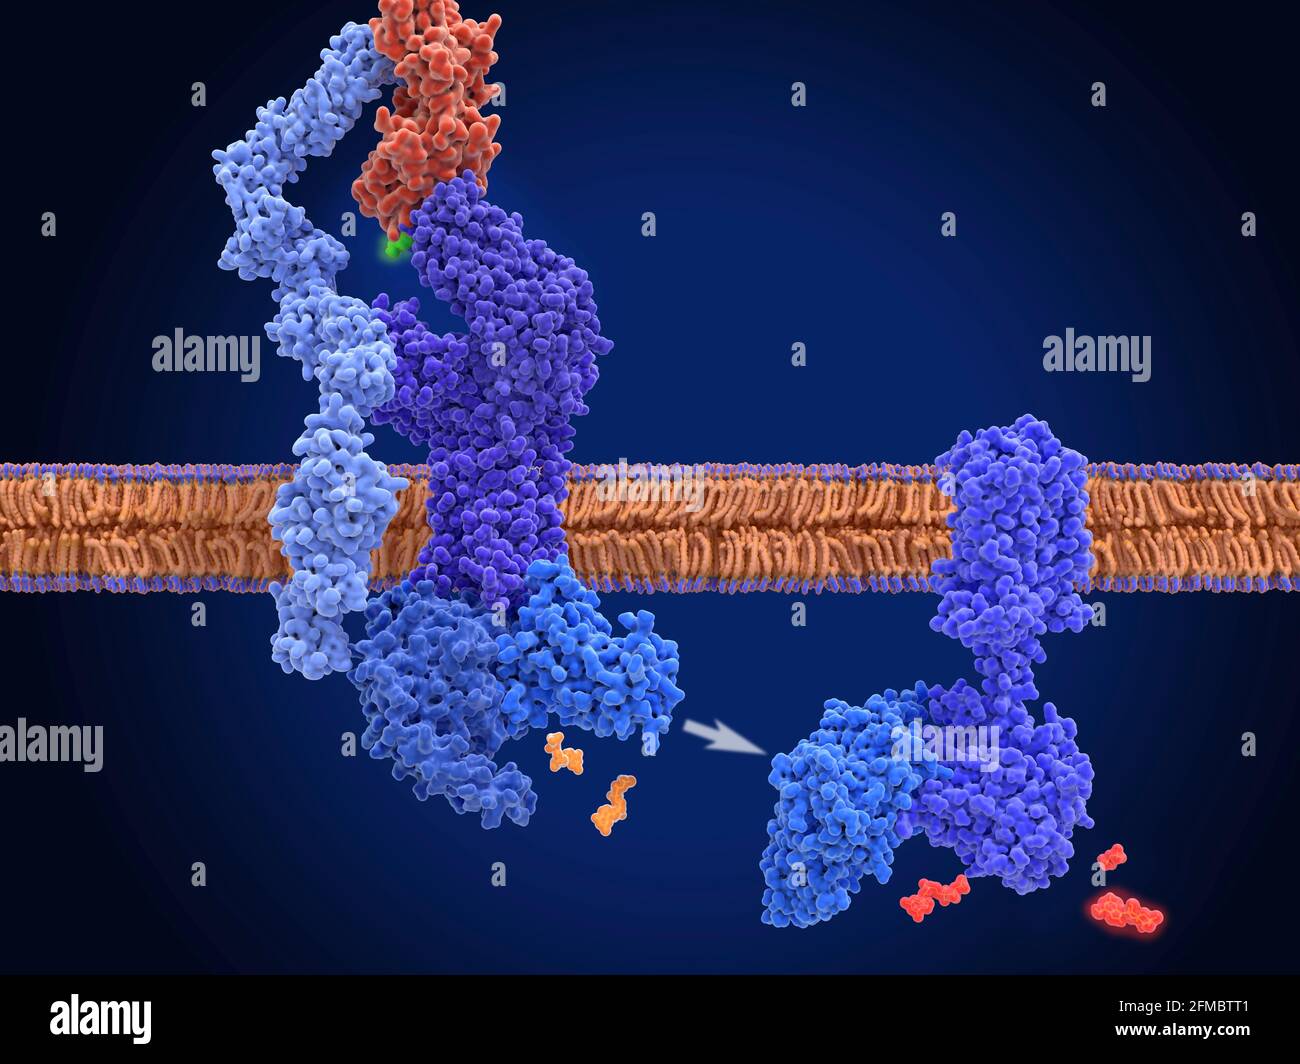 T cell receptor activation, molecular model Stock Photo